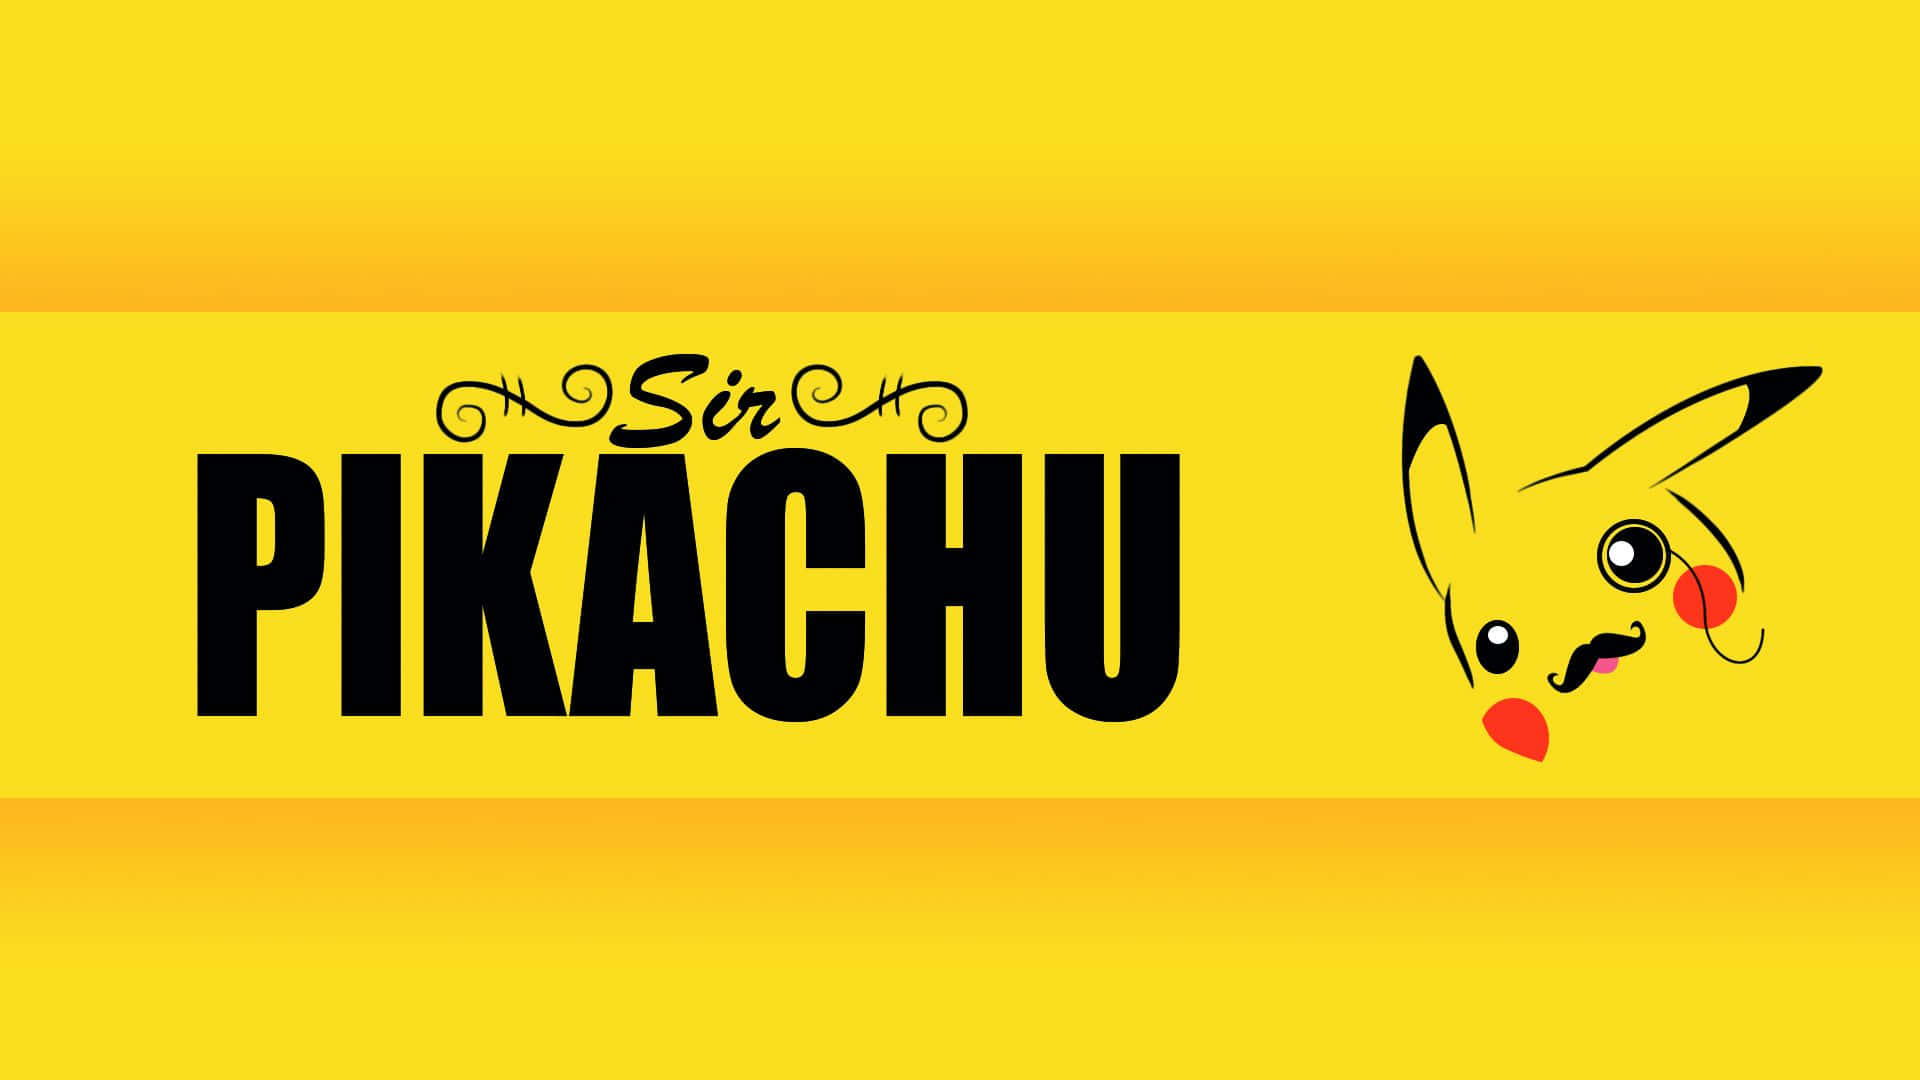 Pikachu from Pokémon with signature signature Jolt